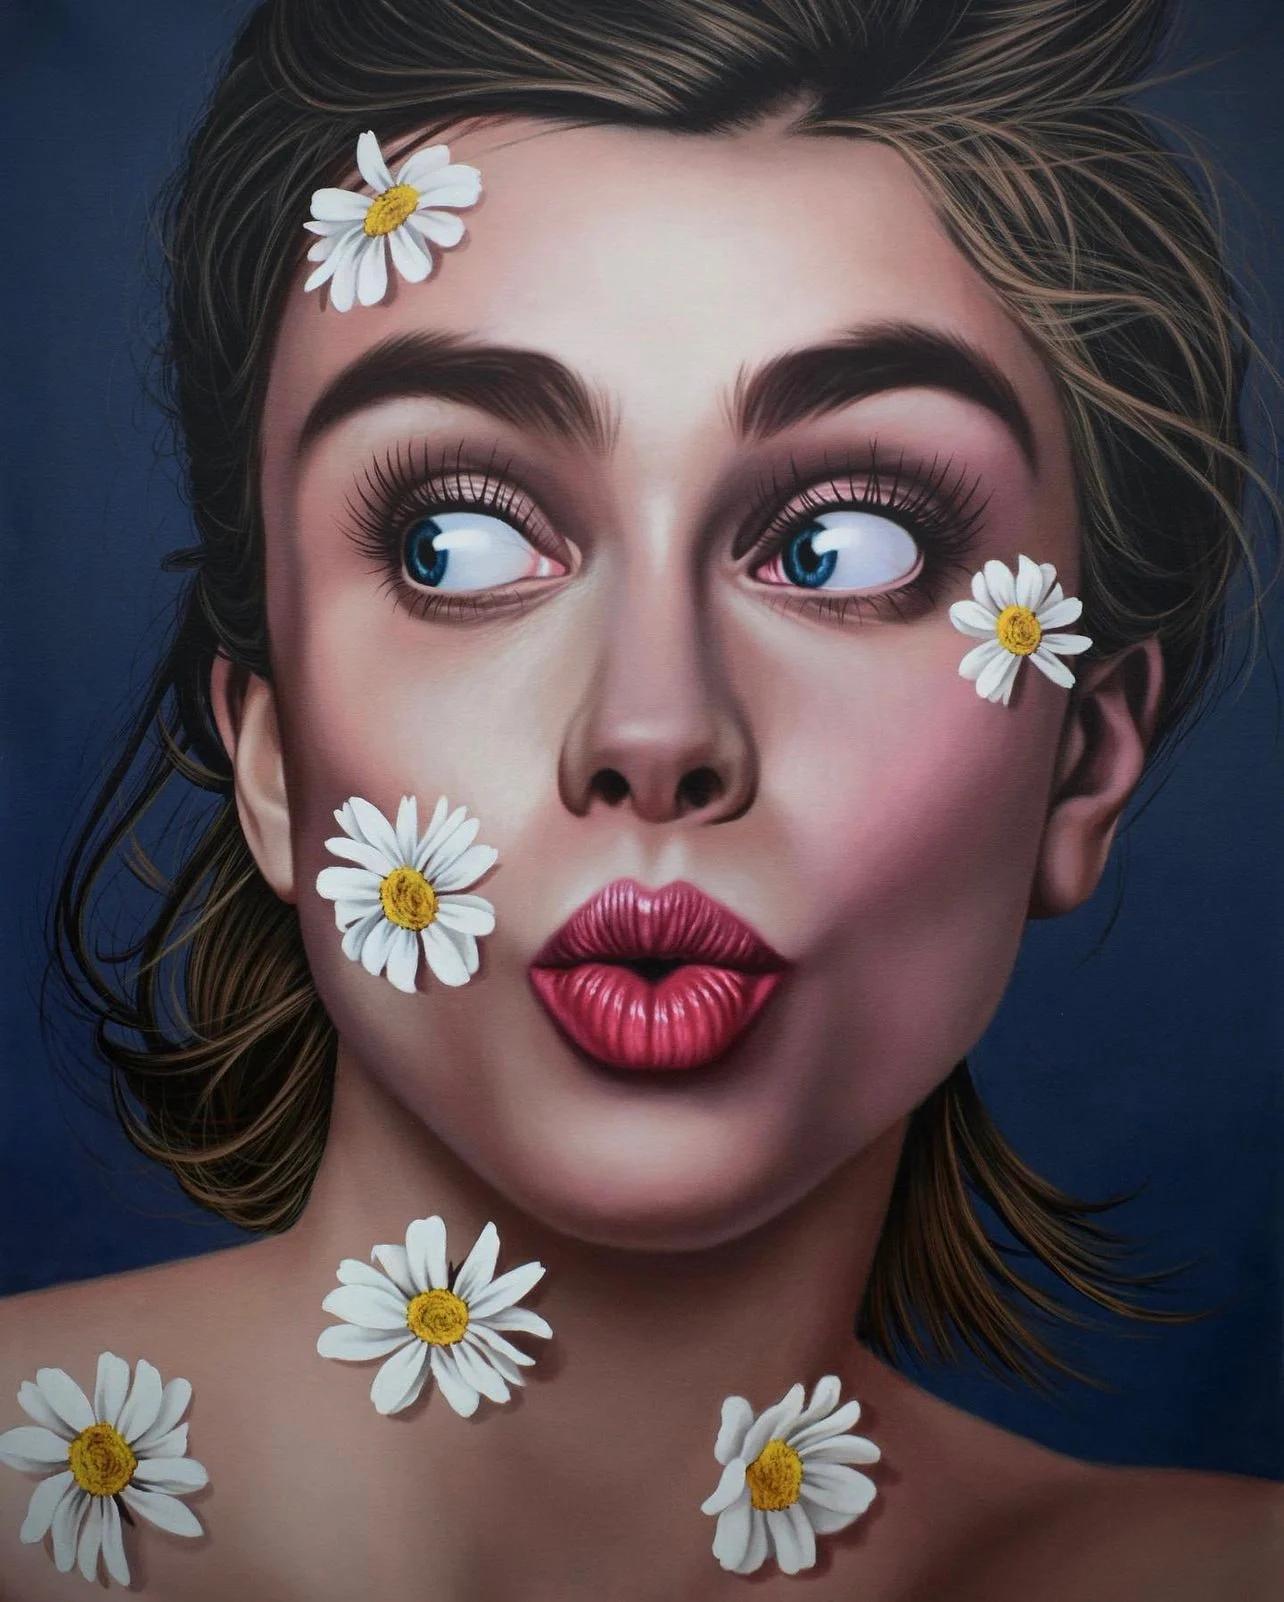 Upsy Daisy - Contemporary Painting by Pablo Fernandez Jr